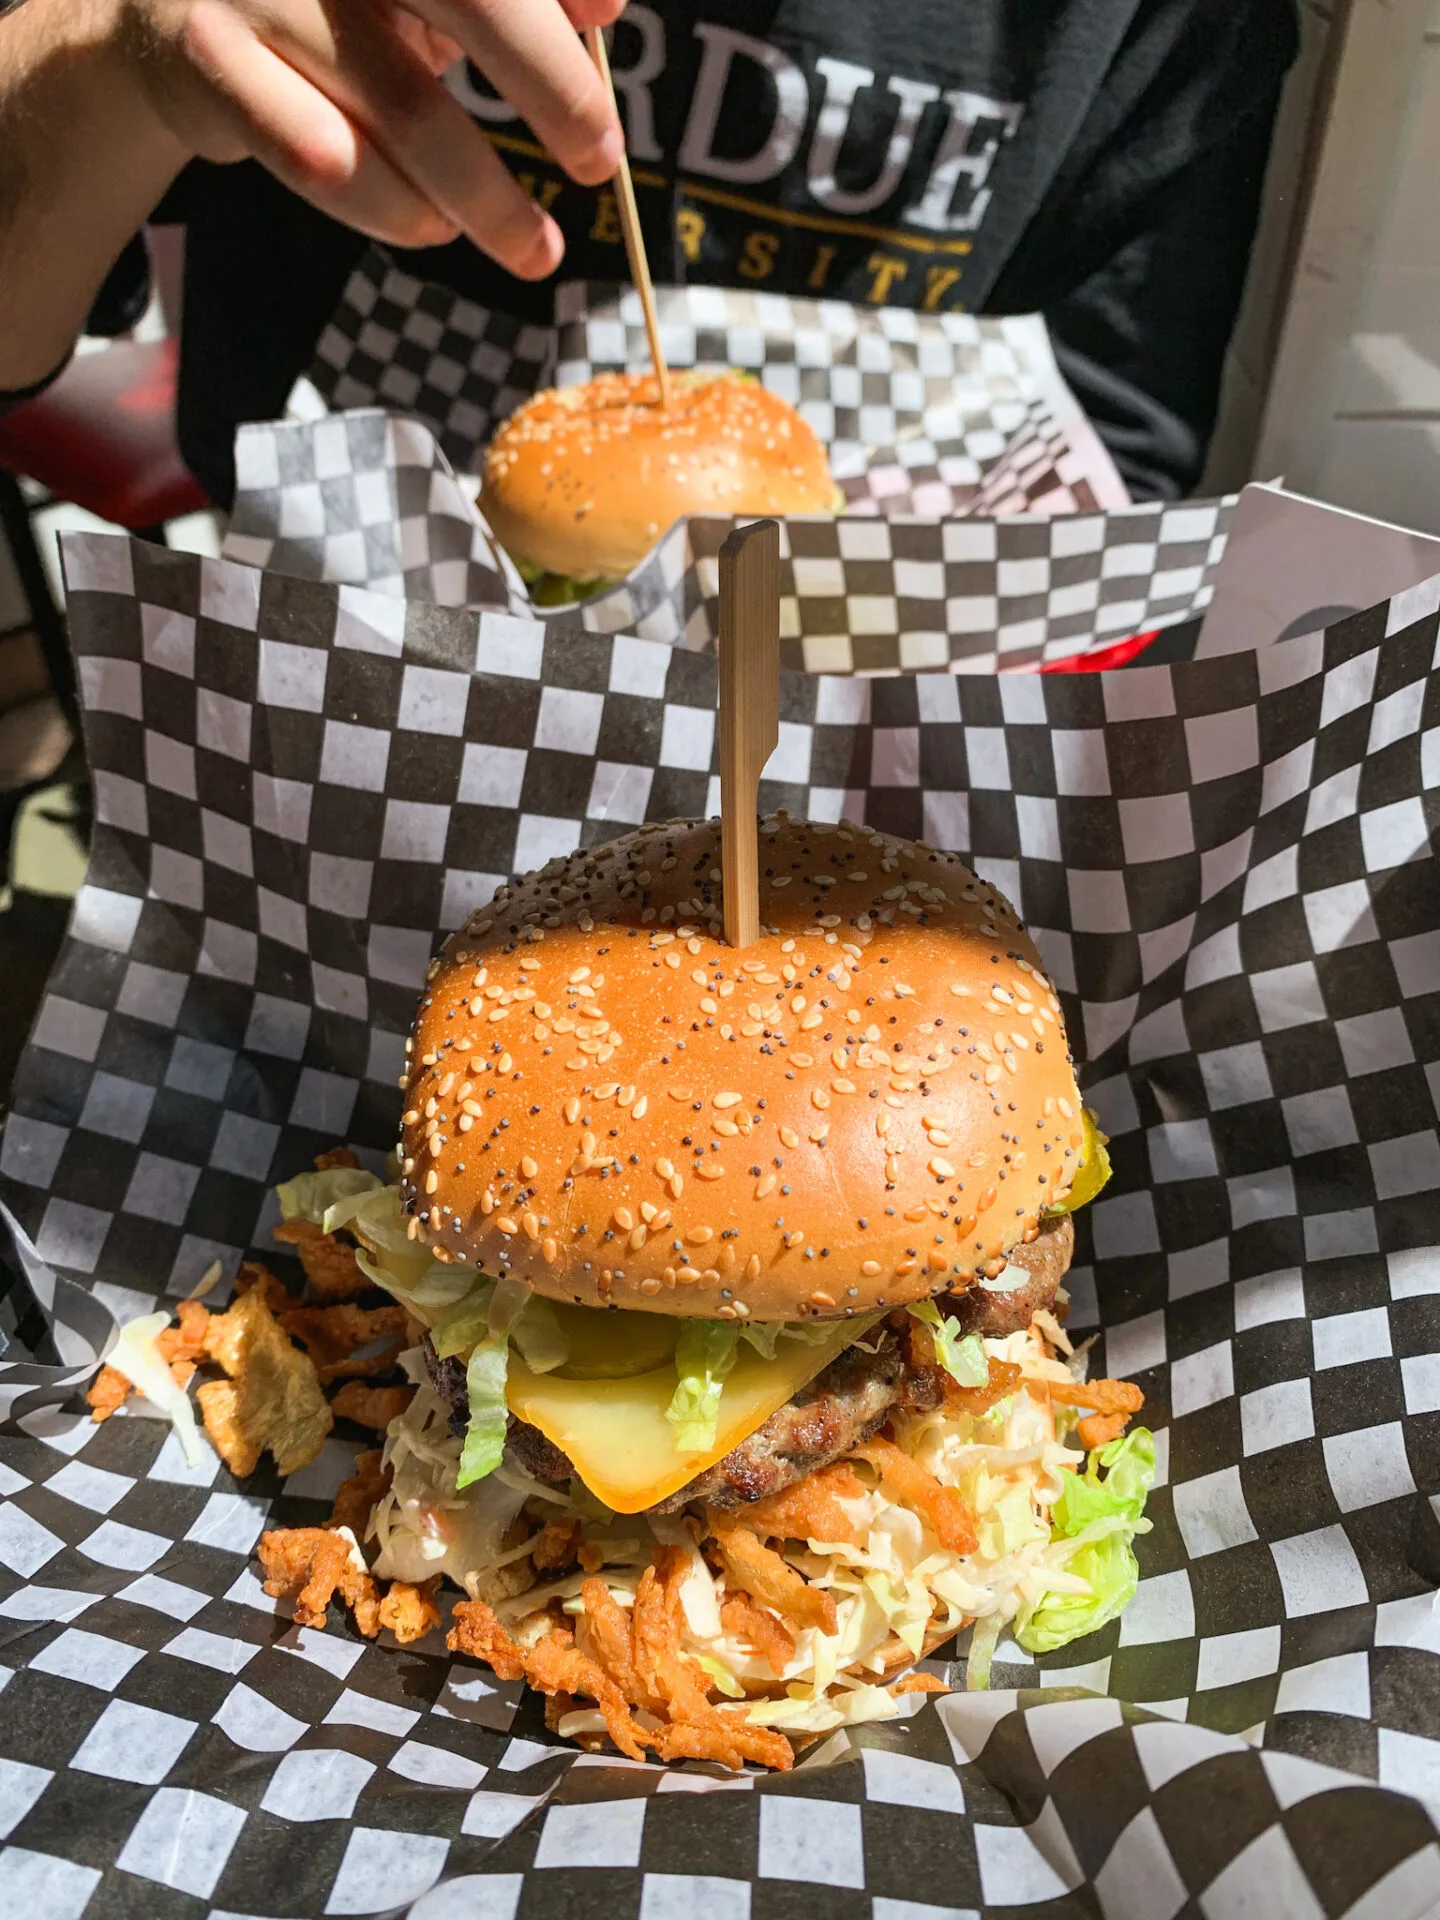 Smokehouse Burger from Splitz Grill restaurant in Whistler, British Columbia